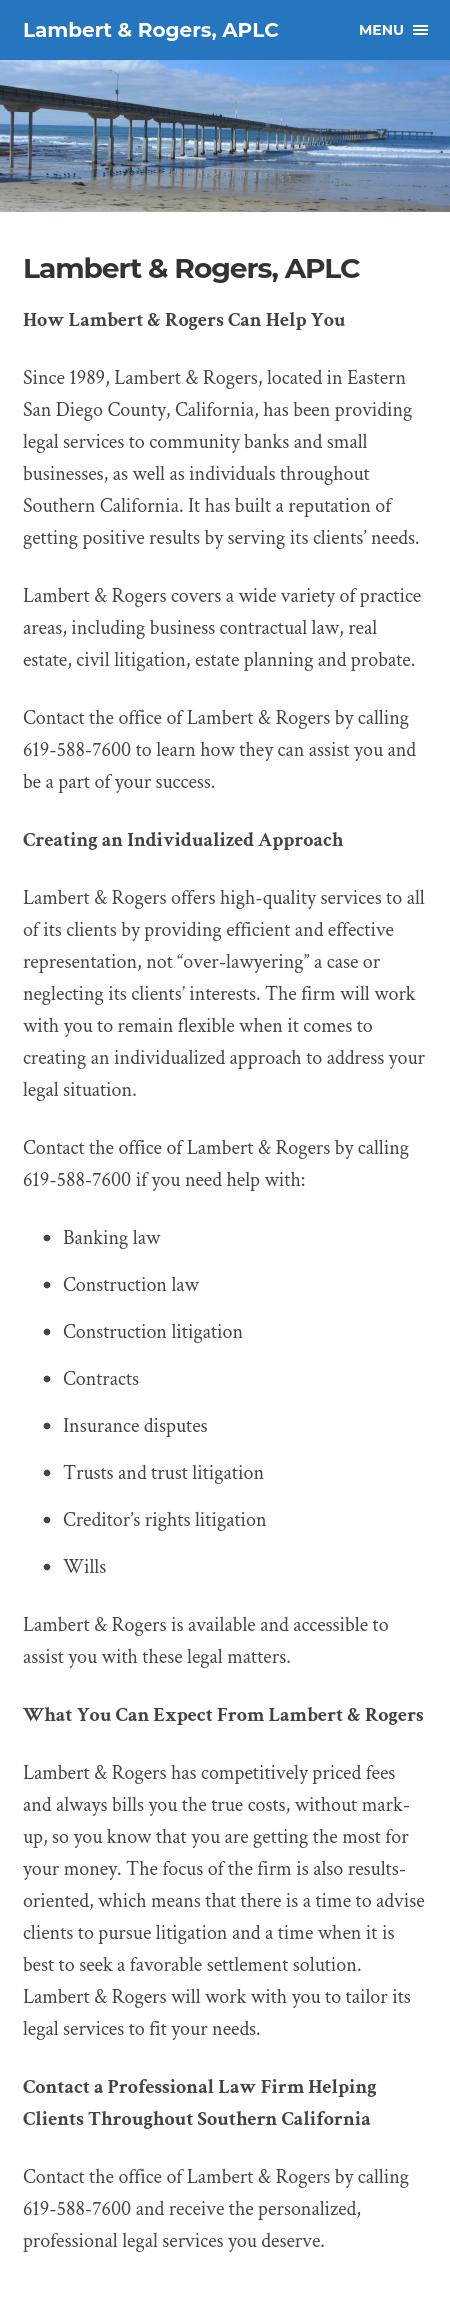 Lambert & Rogers, APLC - El Cajon CA Lawyers